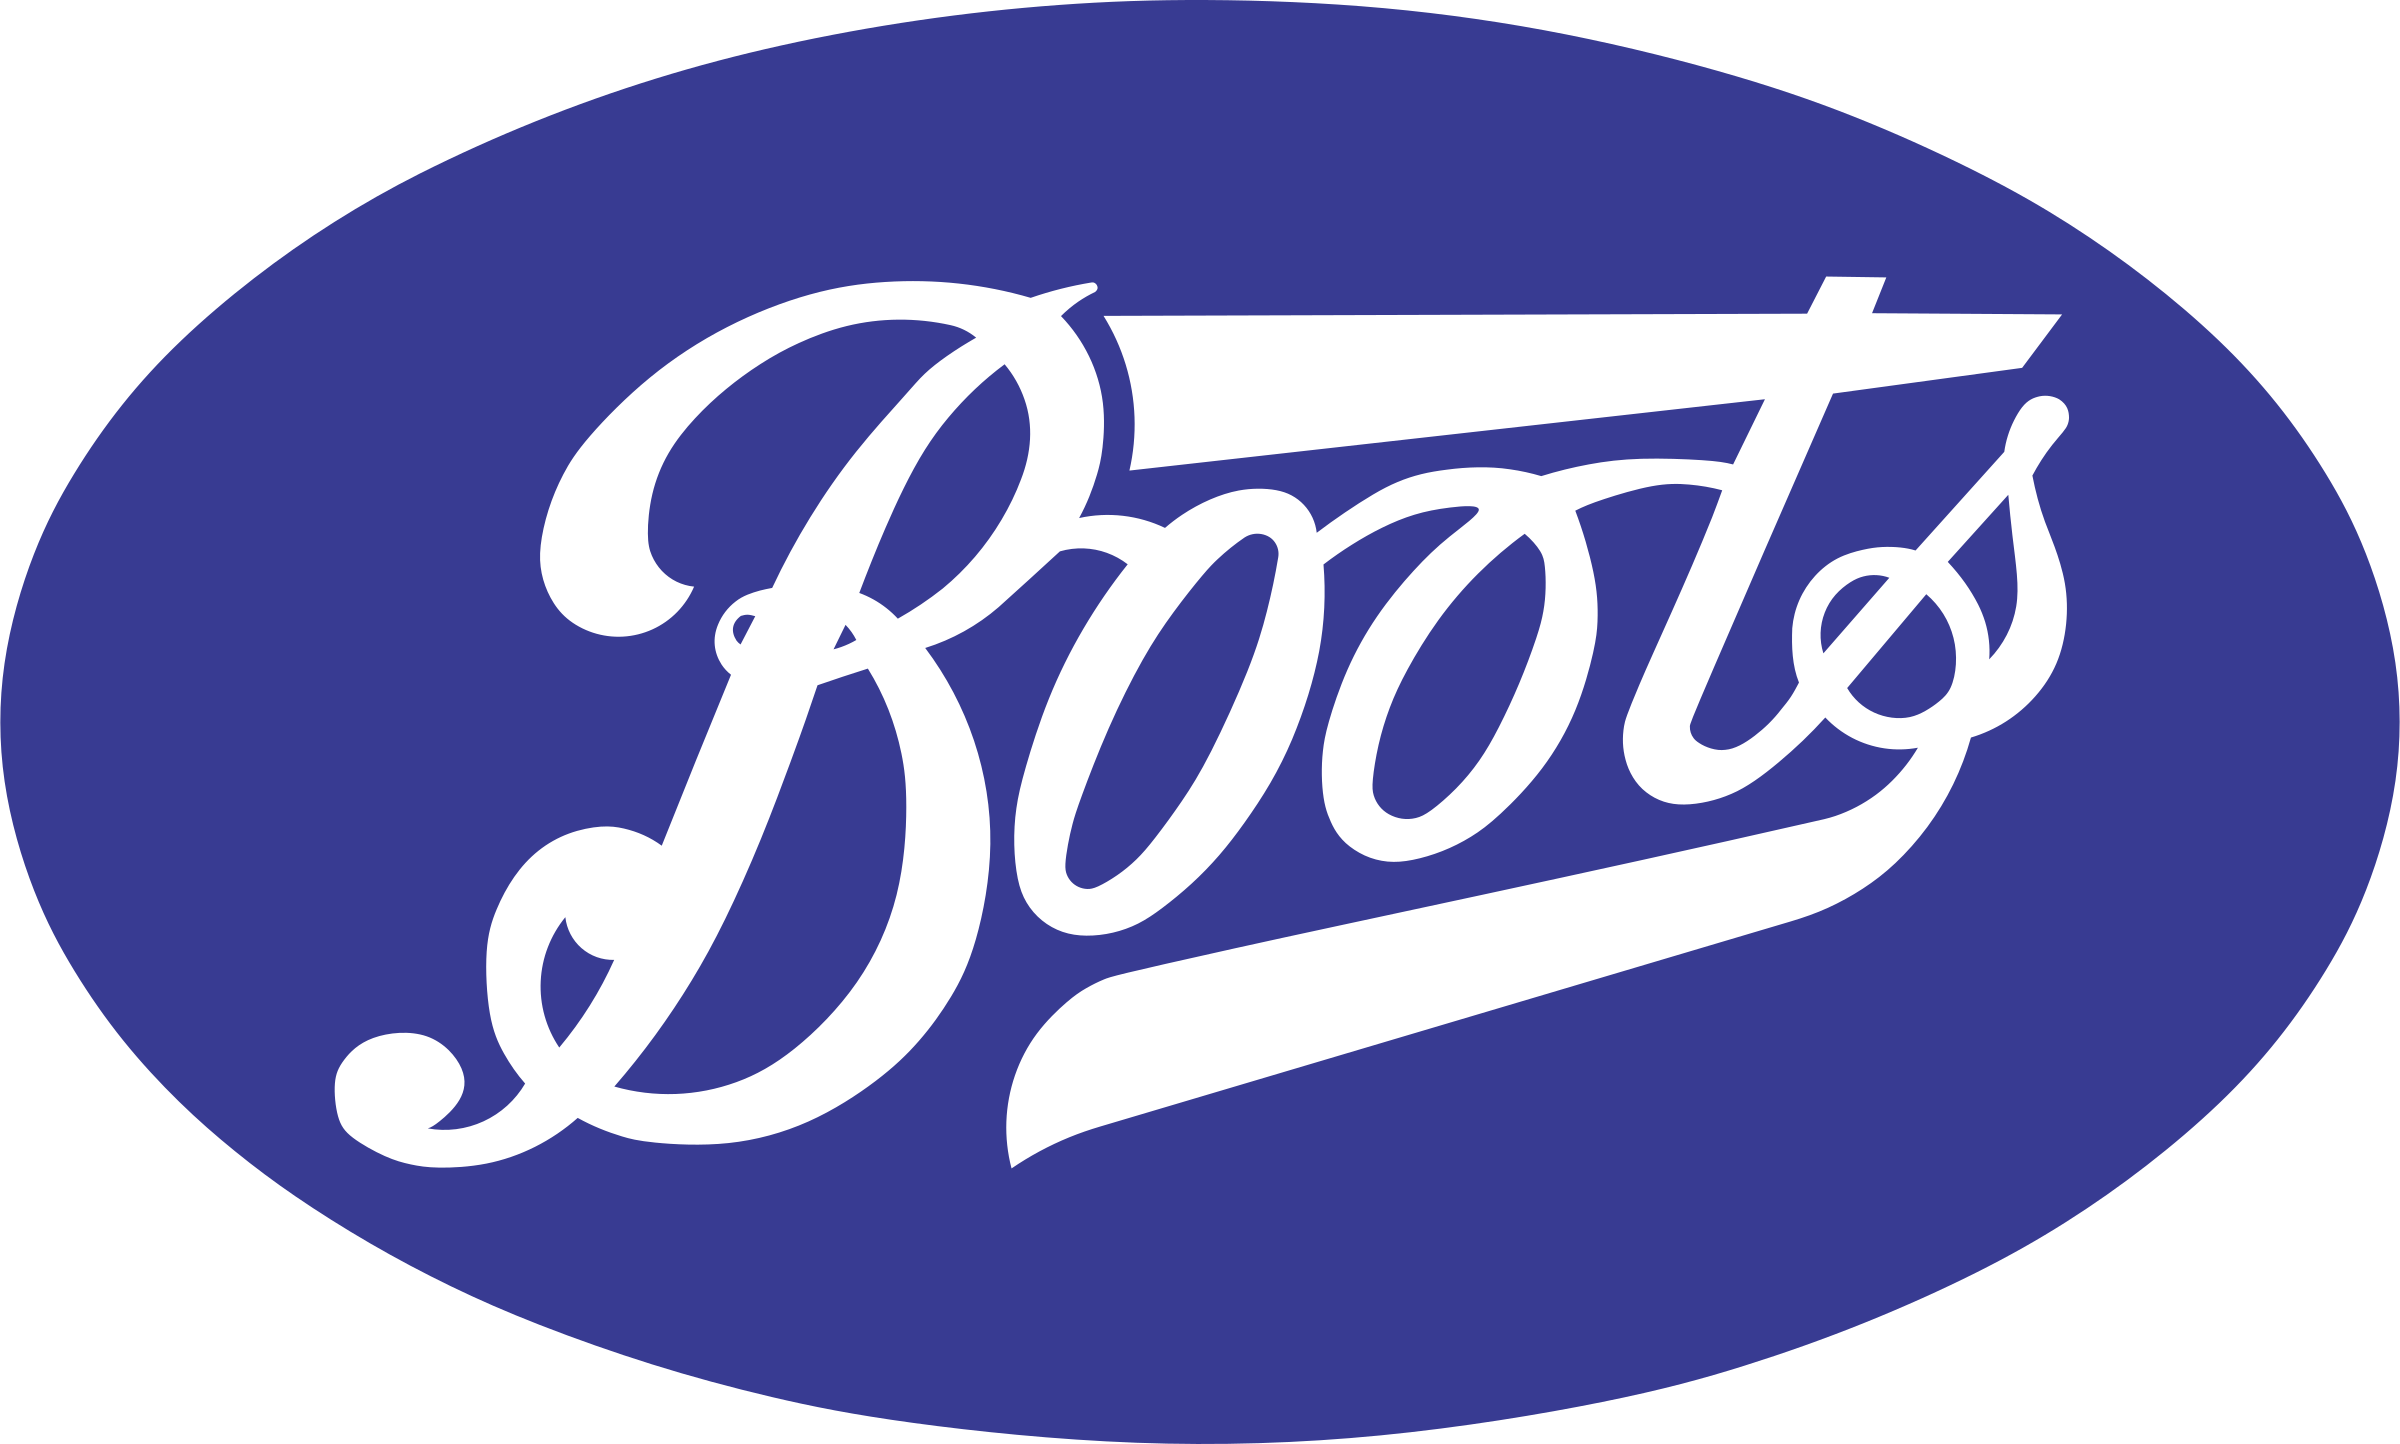 boots-logo-logo-png-transparent.png